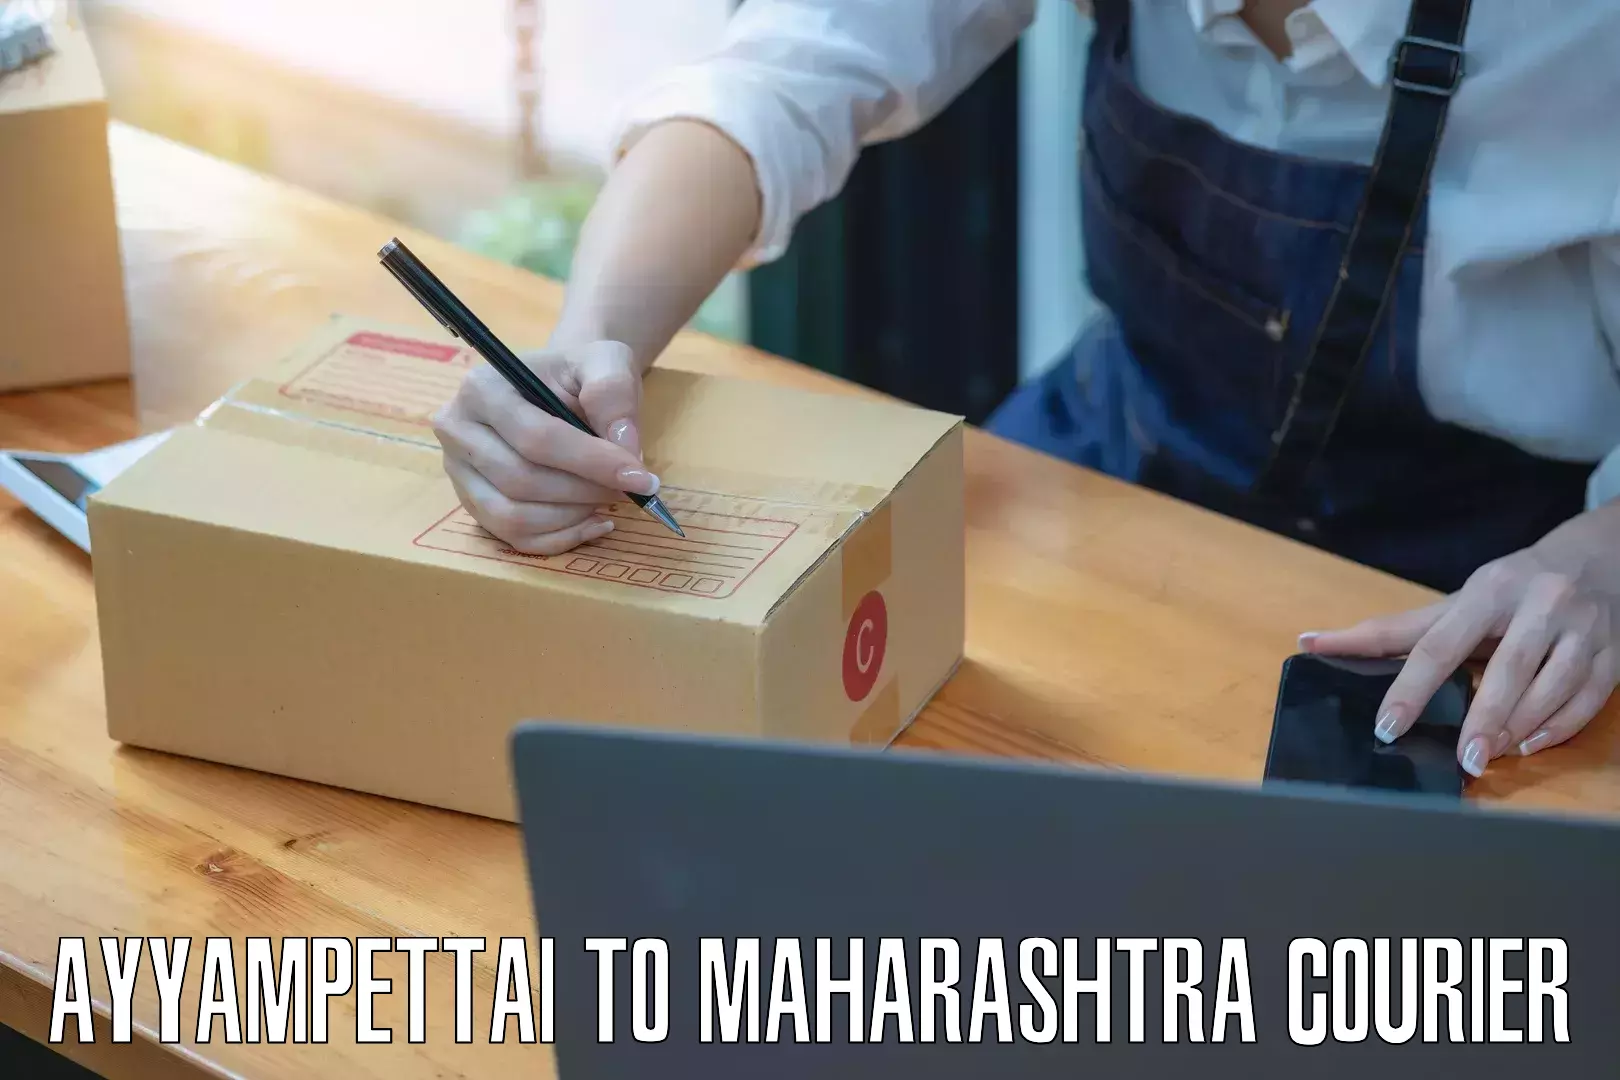 Courier insurance Ayyampettai to Maharashtra